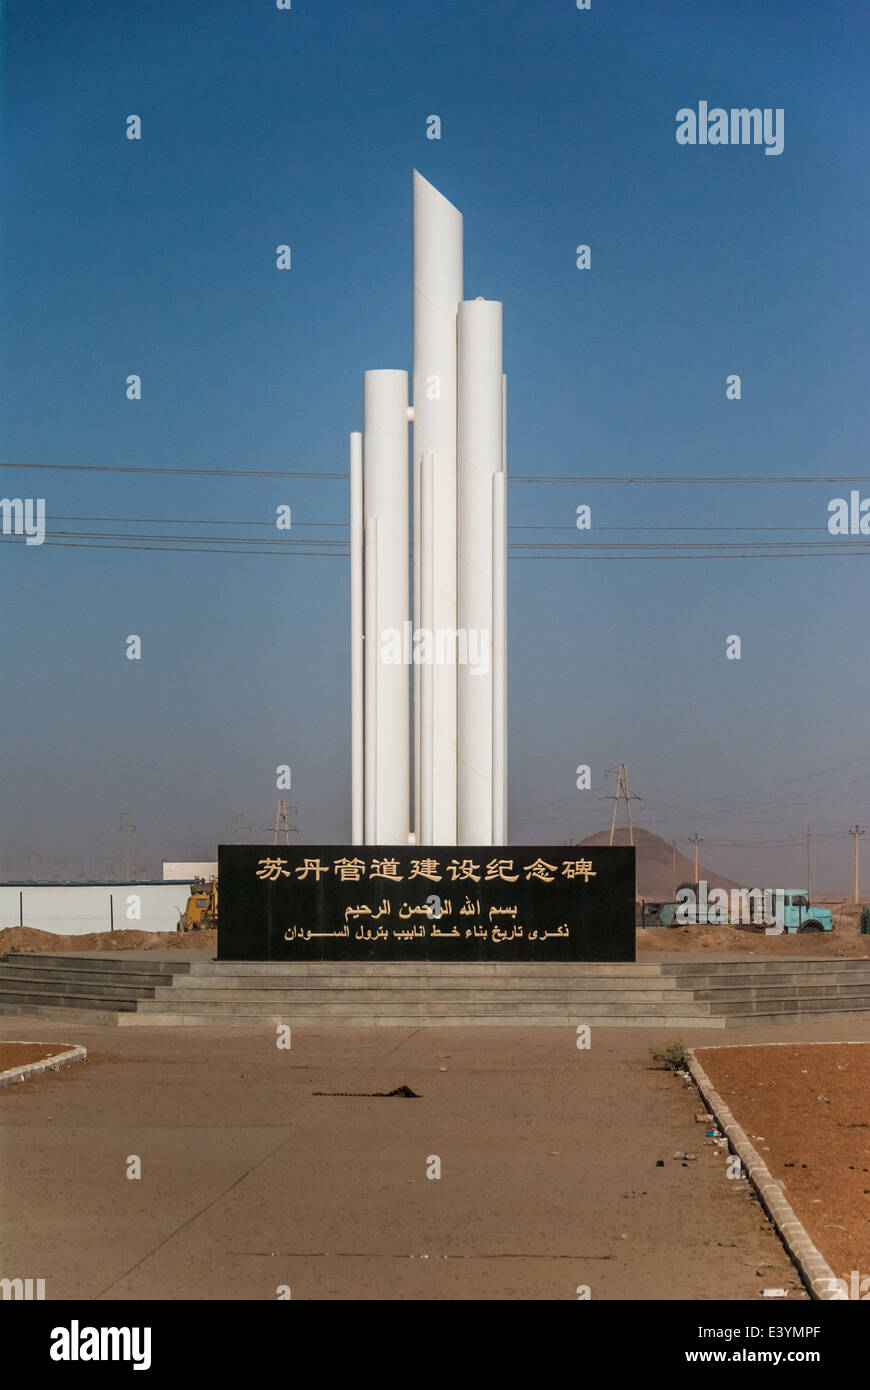 Chinese-Sudanese monument commemorating opening trans-Sudan petrol pipeline and refinery, Al Jaily (Al-Jaili, Al-Gaili, Al-Geil), northern Sudan Stock Photo